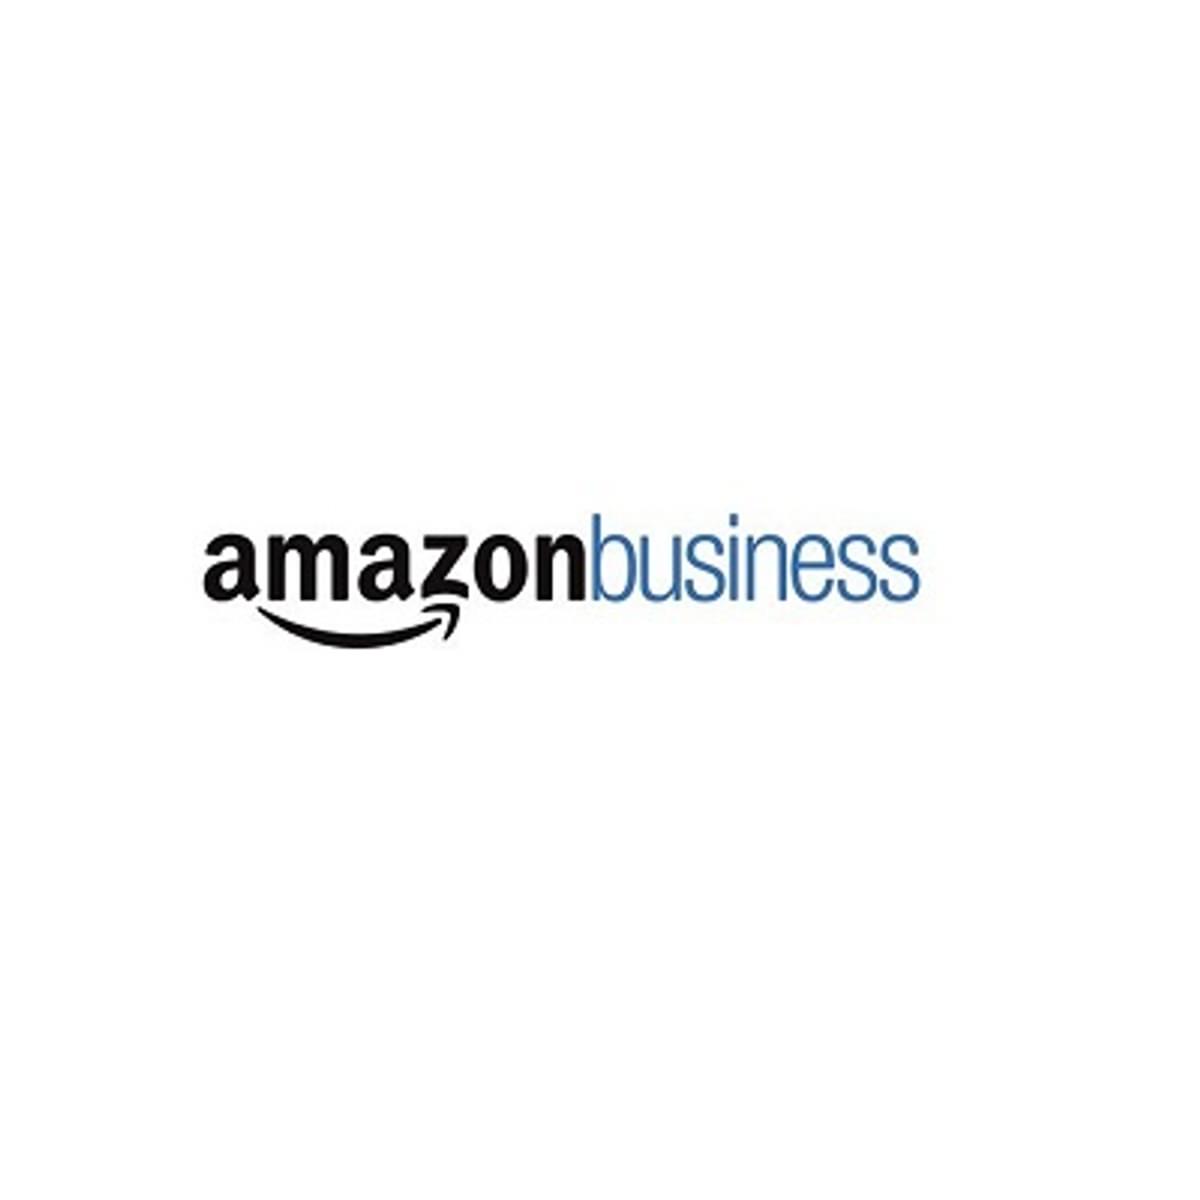 Amazon Business B2B-platform haalt 10 miljard dollar omzet image